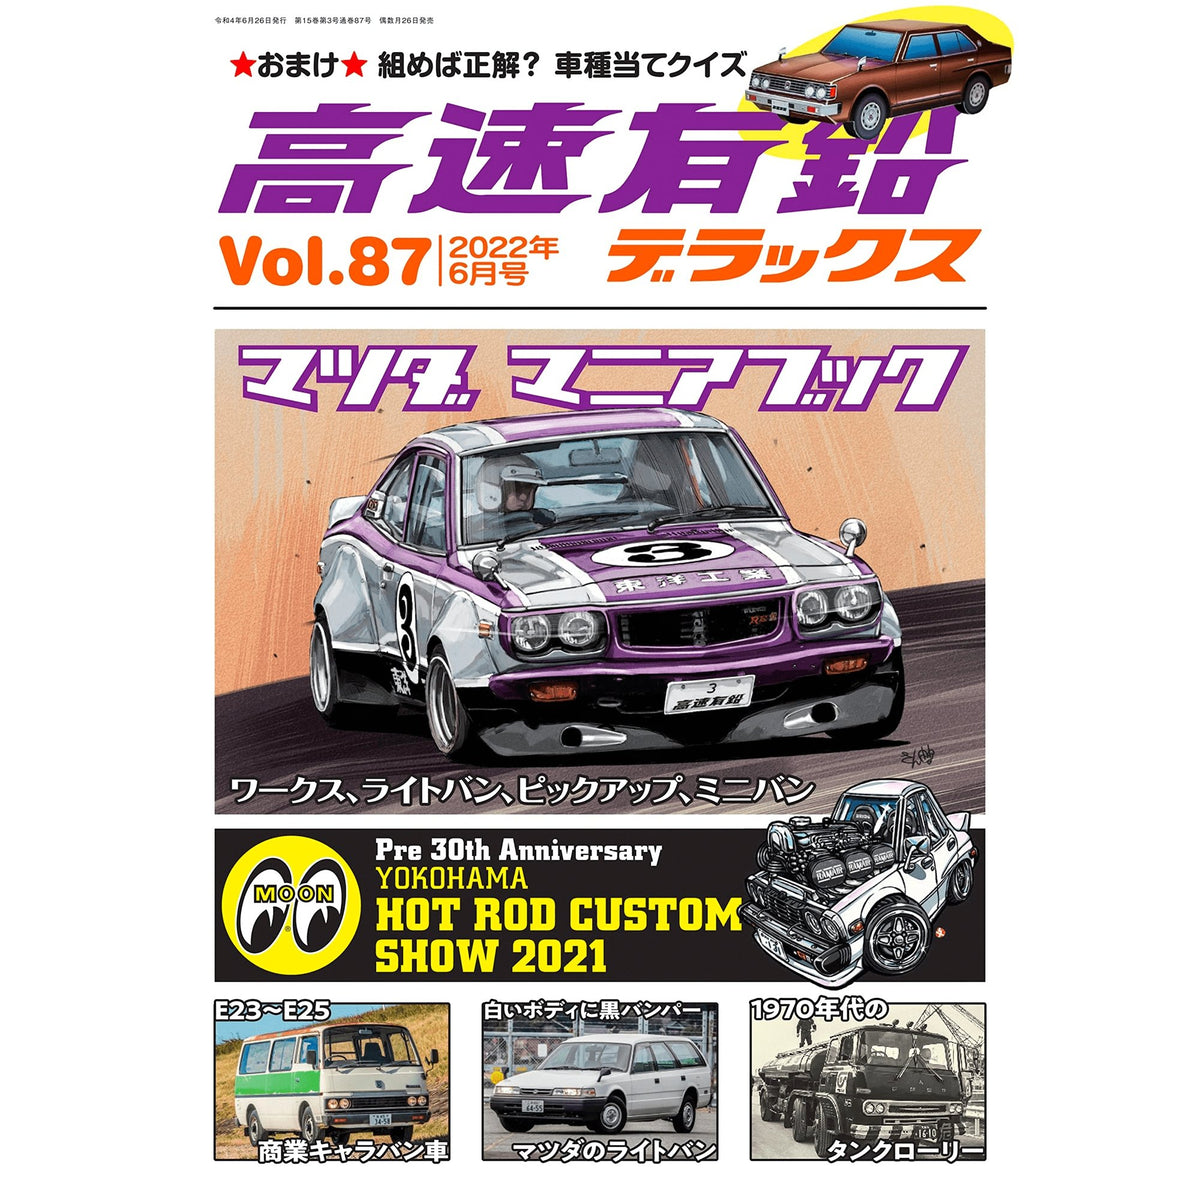 JDM Japan High Speed Leaded Deluxe Hot Rod Magazine June 2022 VOL. 87 - Sugoi JDM